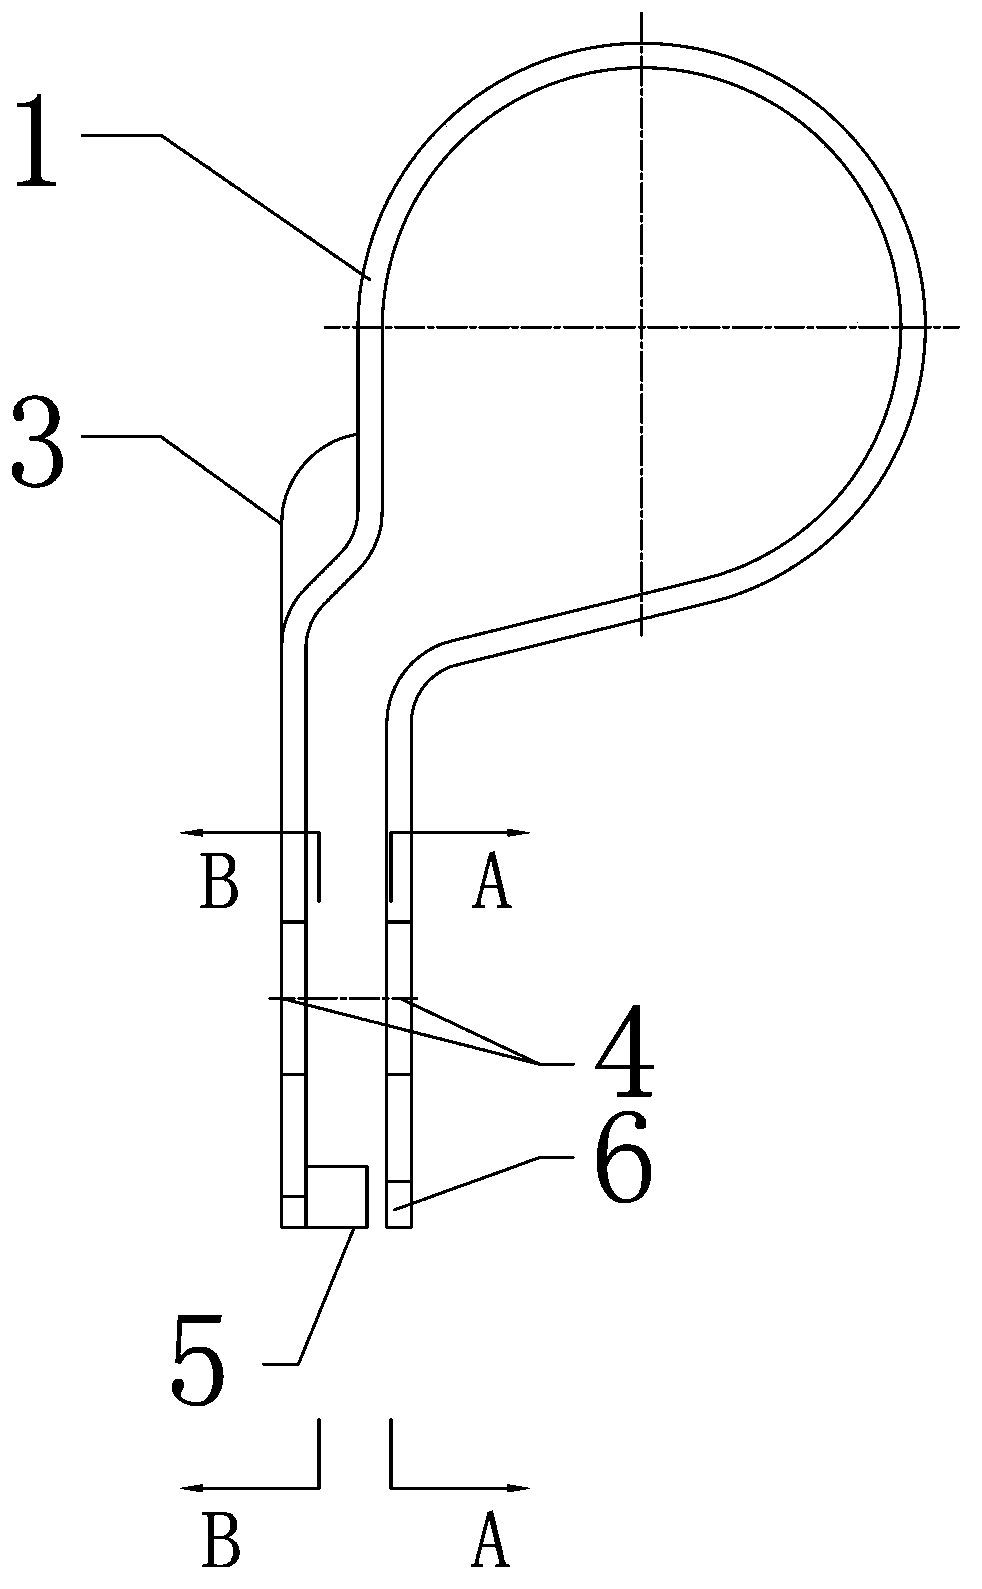 Fabric clamping suspension clamp